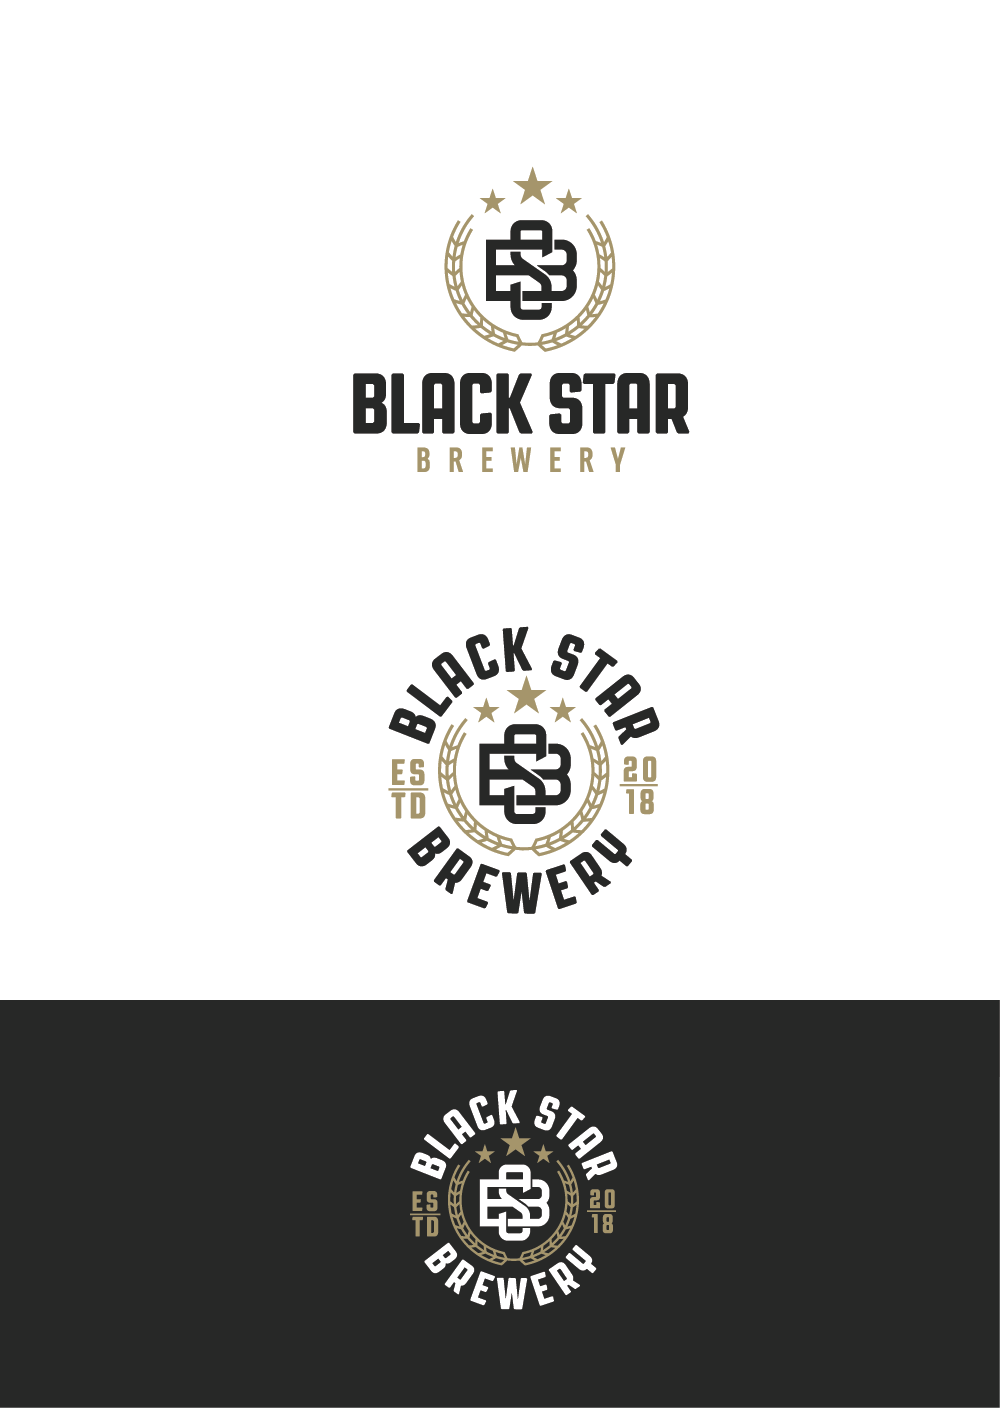 Black Star in Circle Company Logo - Logo Design for Black Star Brewery Co. by NenadM | Design #20616960